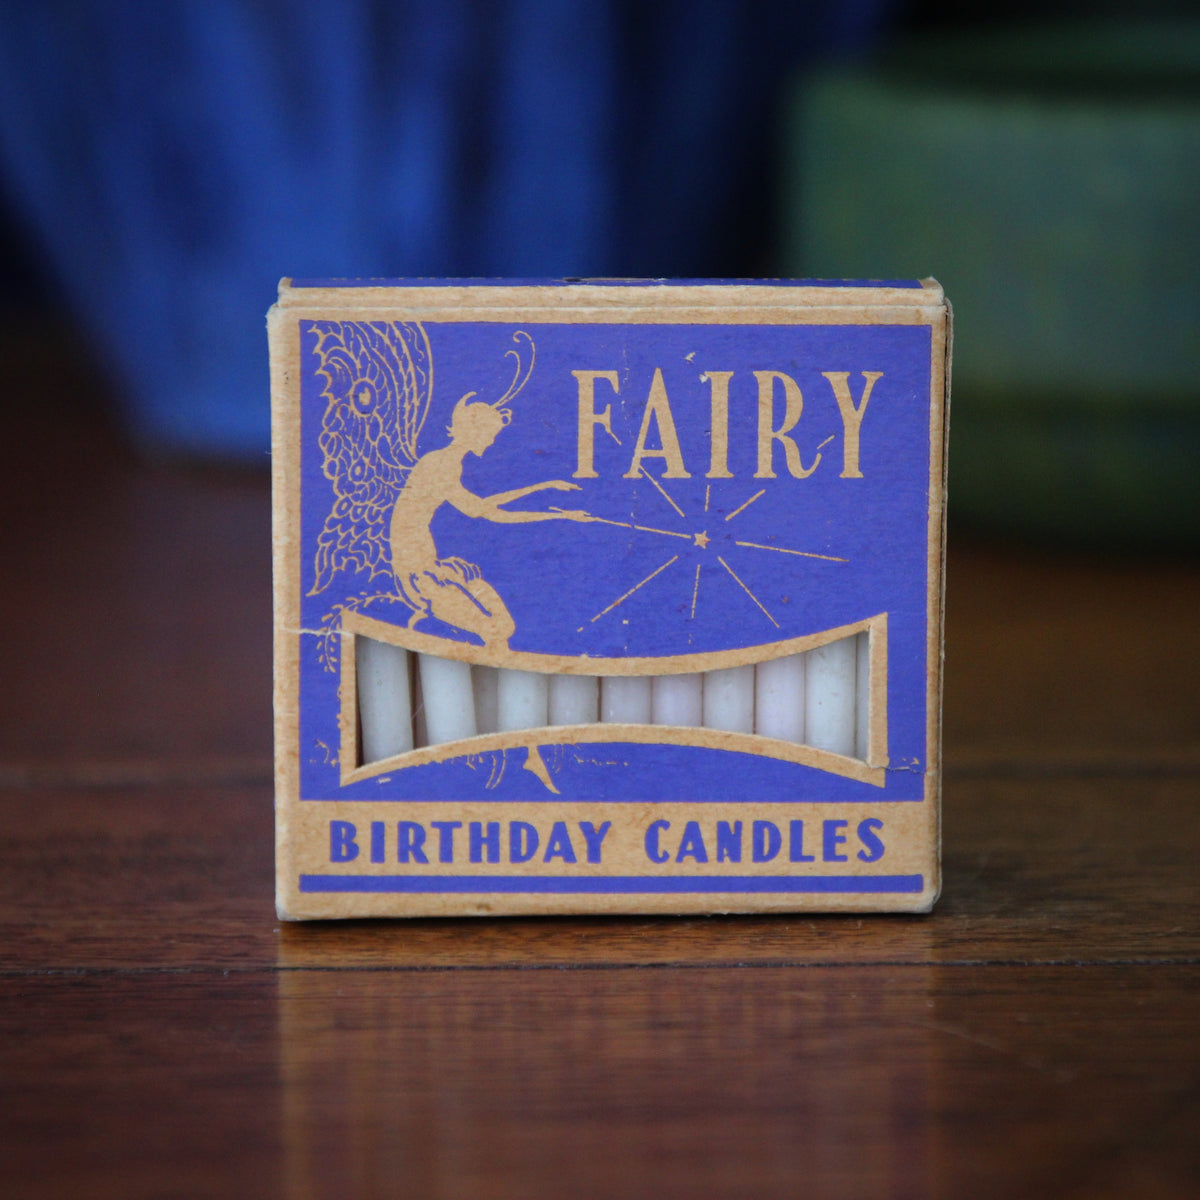 "Fairy" Birthday Candles